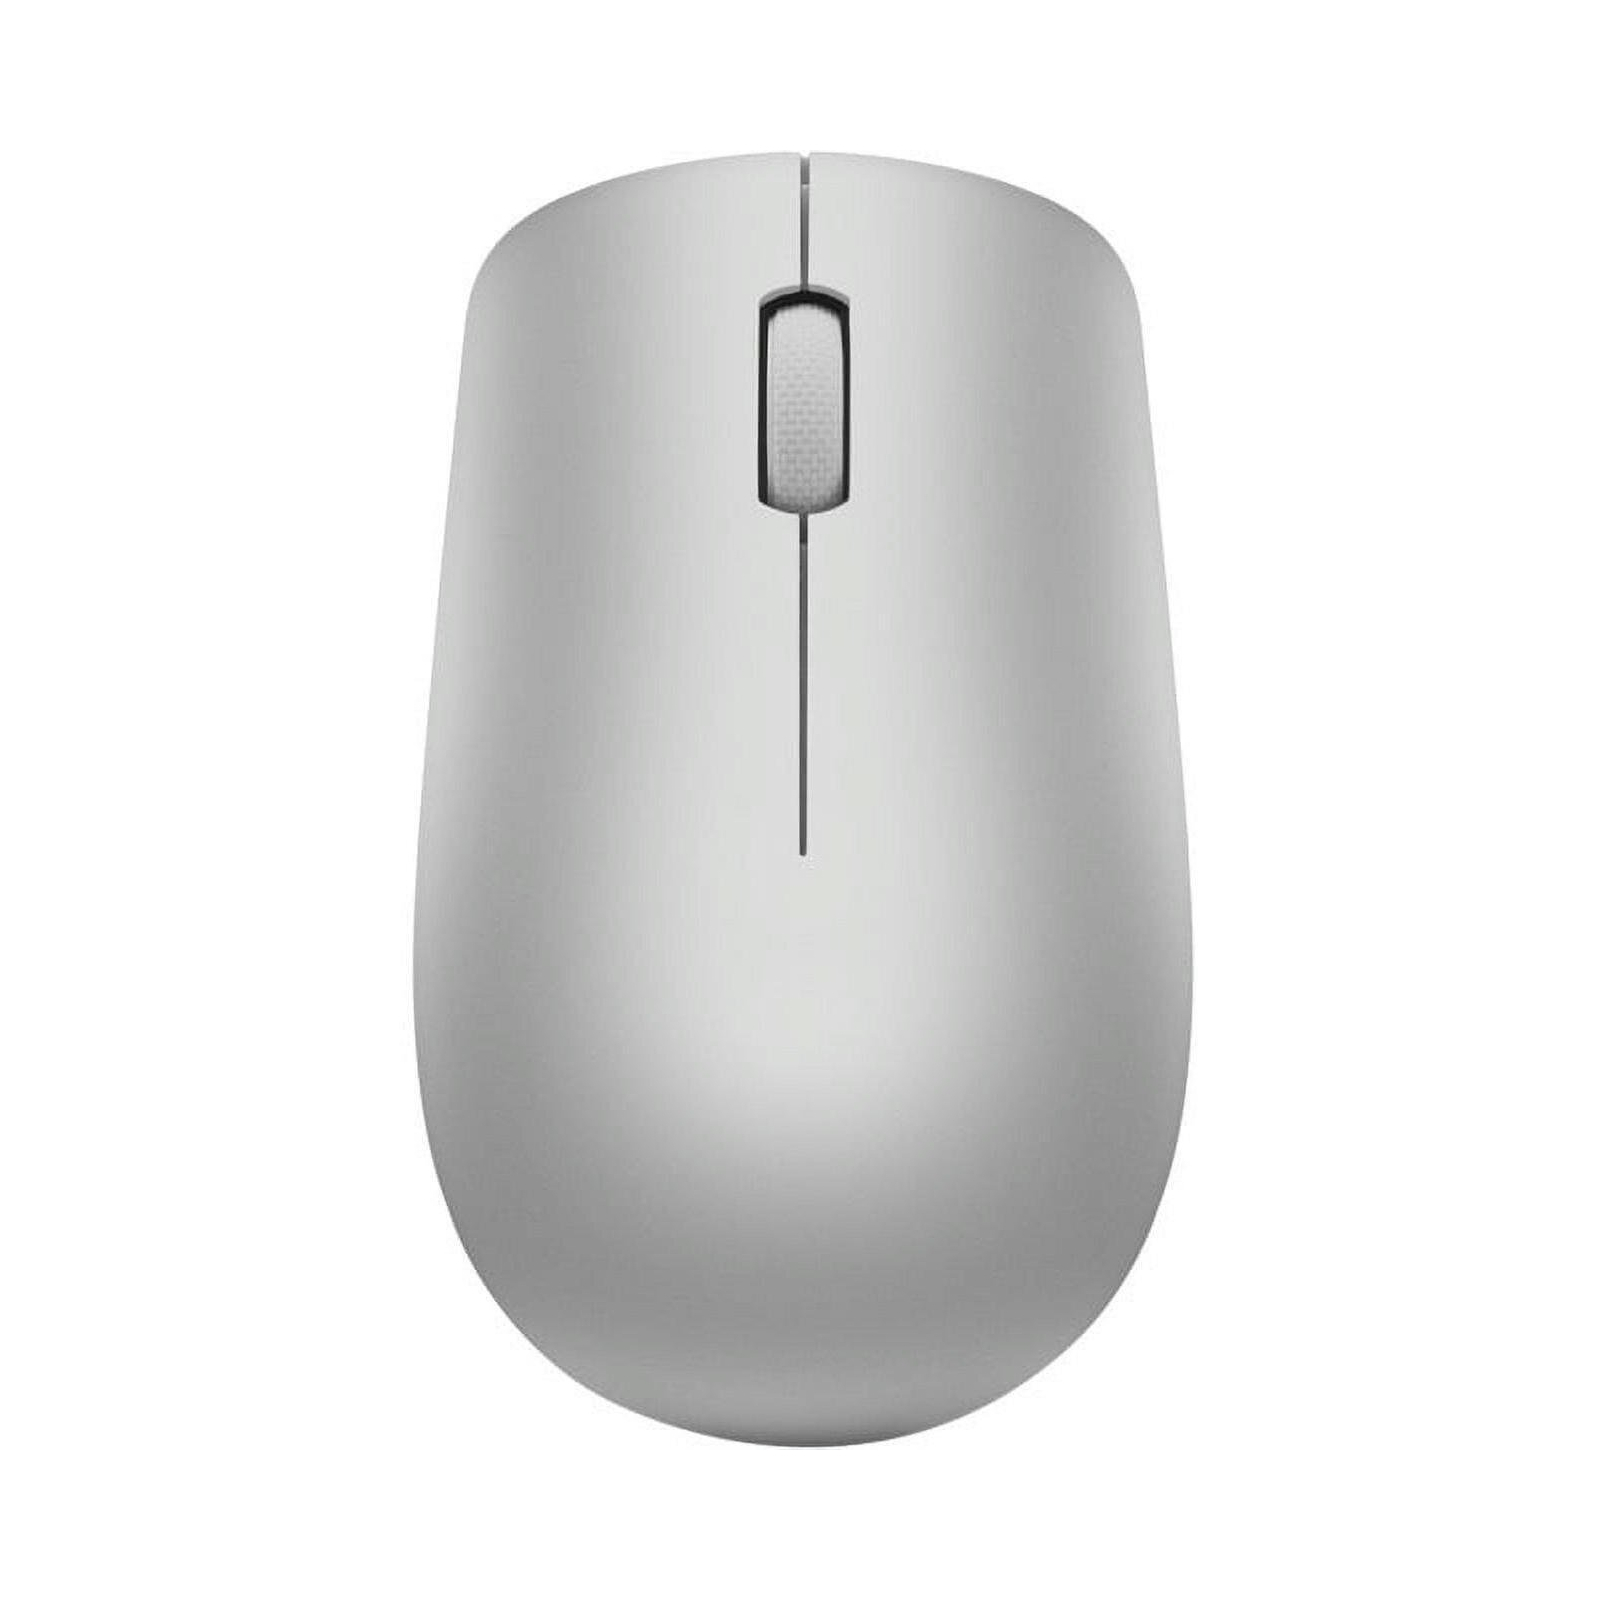 Мышка Lenovo 530 Wireless Platinum Grey (GY50Z18984) изображение 5